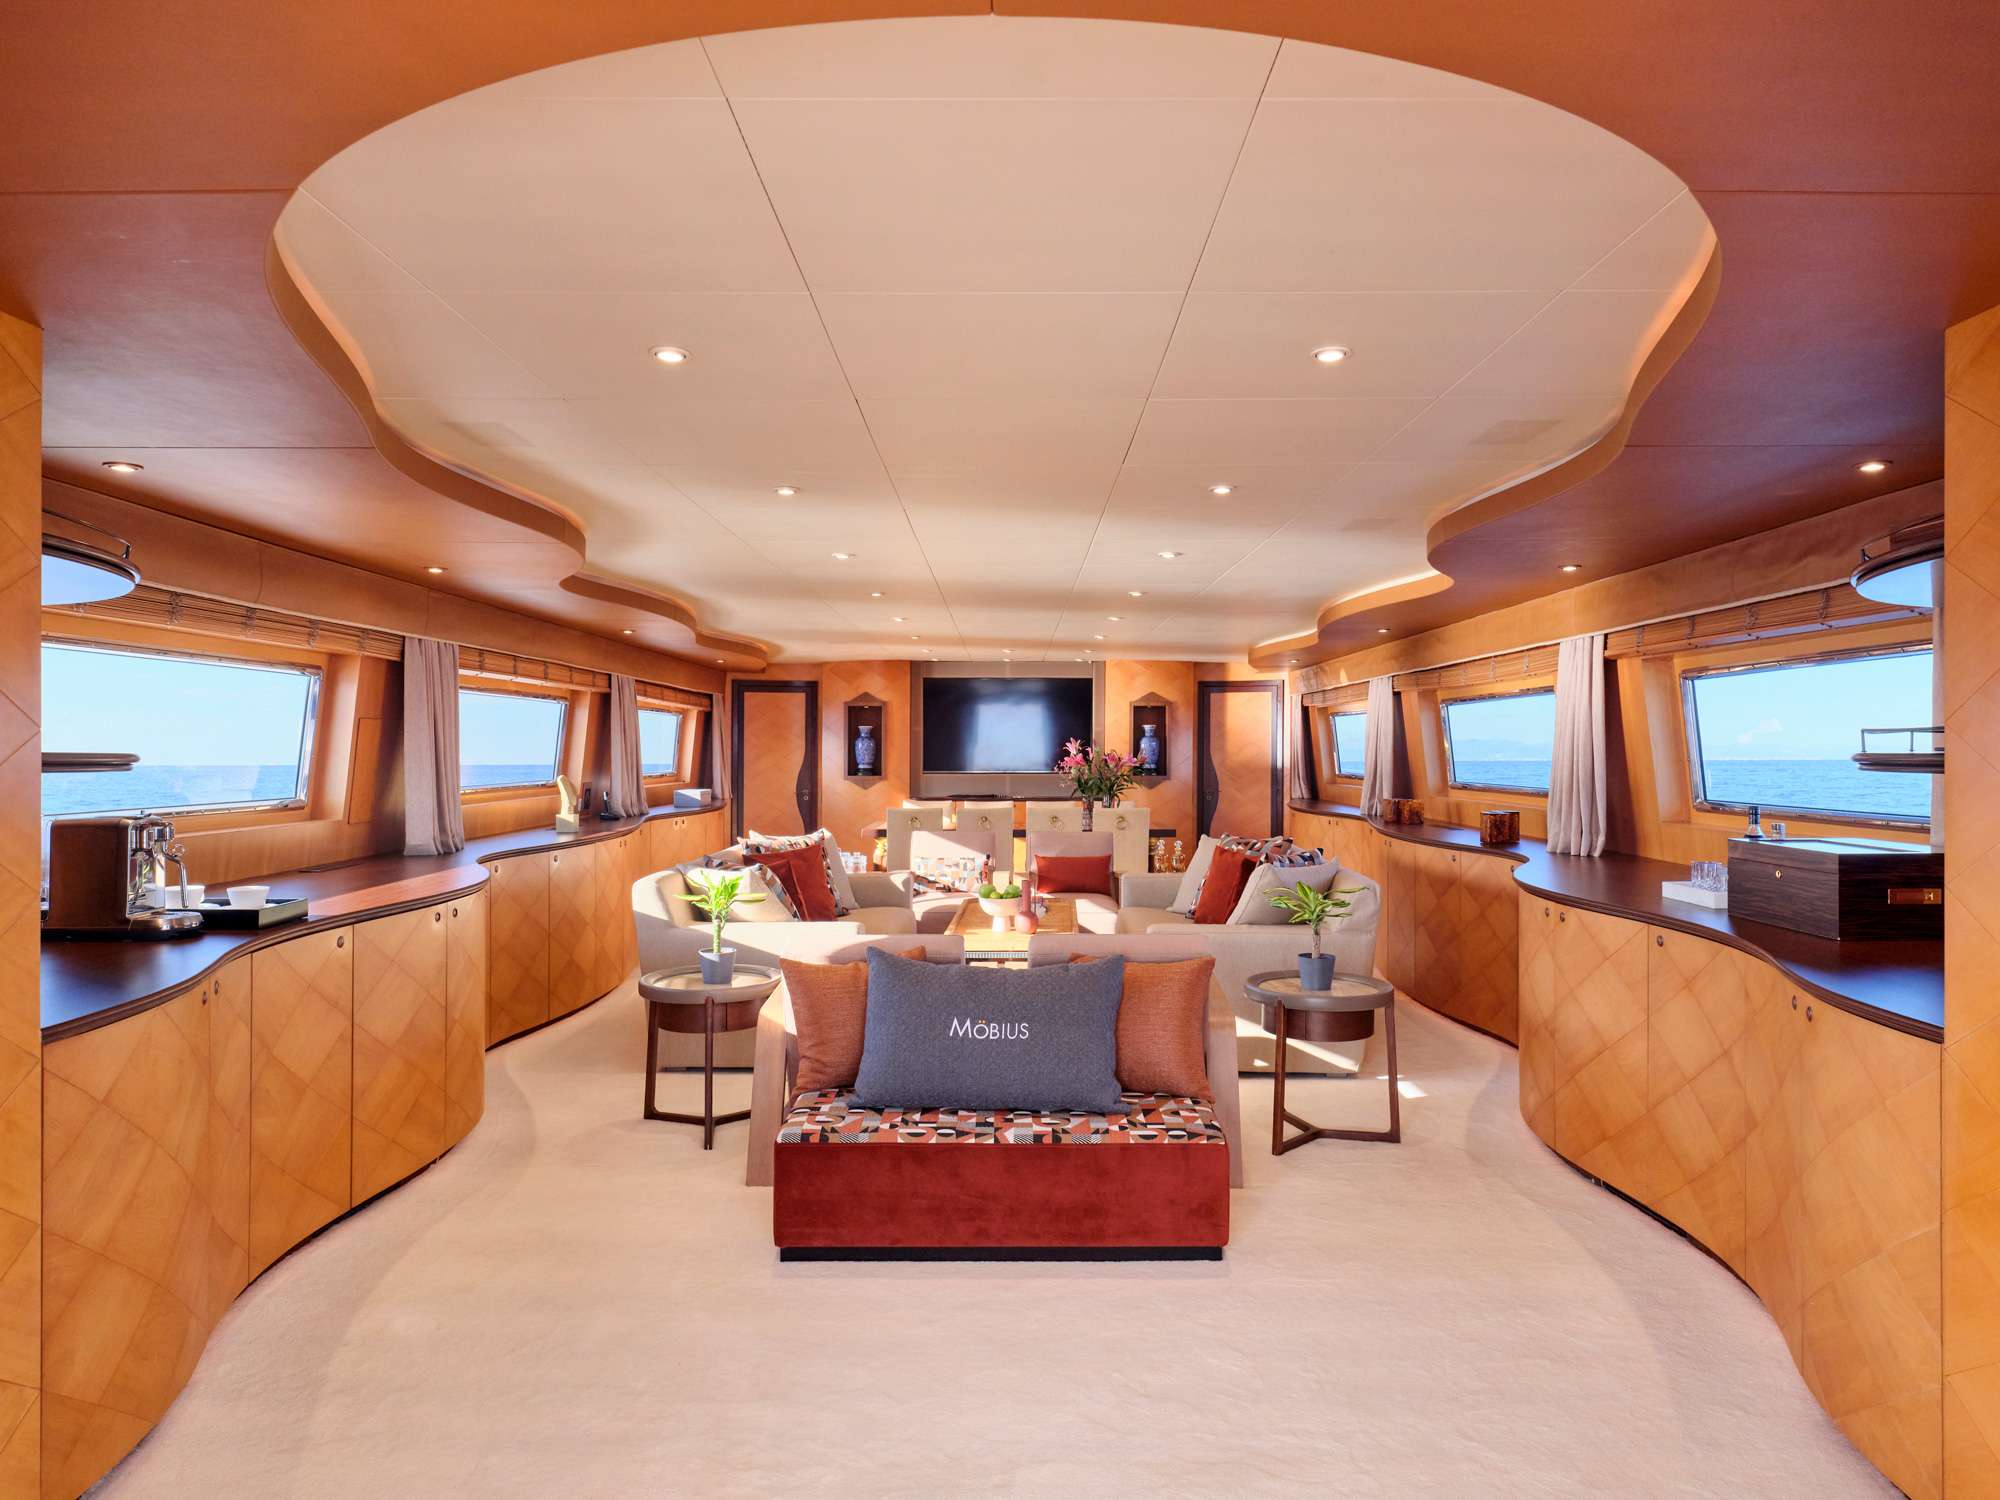 MOBIUS Yacht Charter - Salon